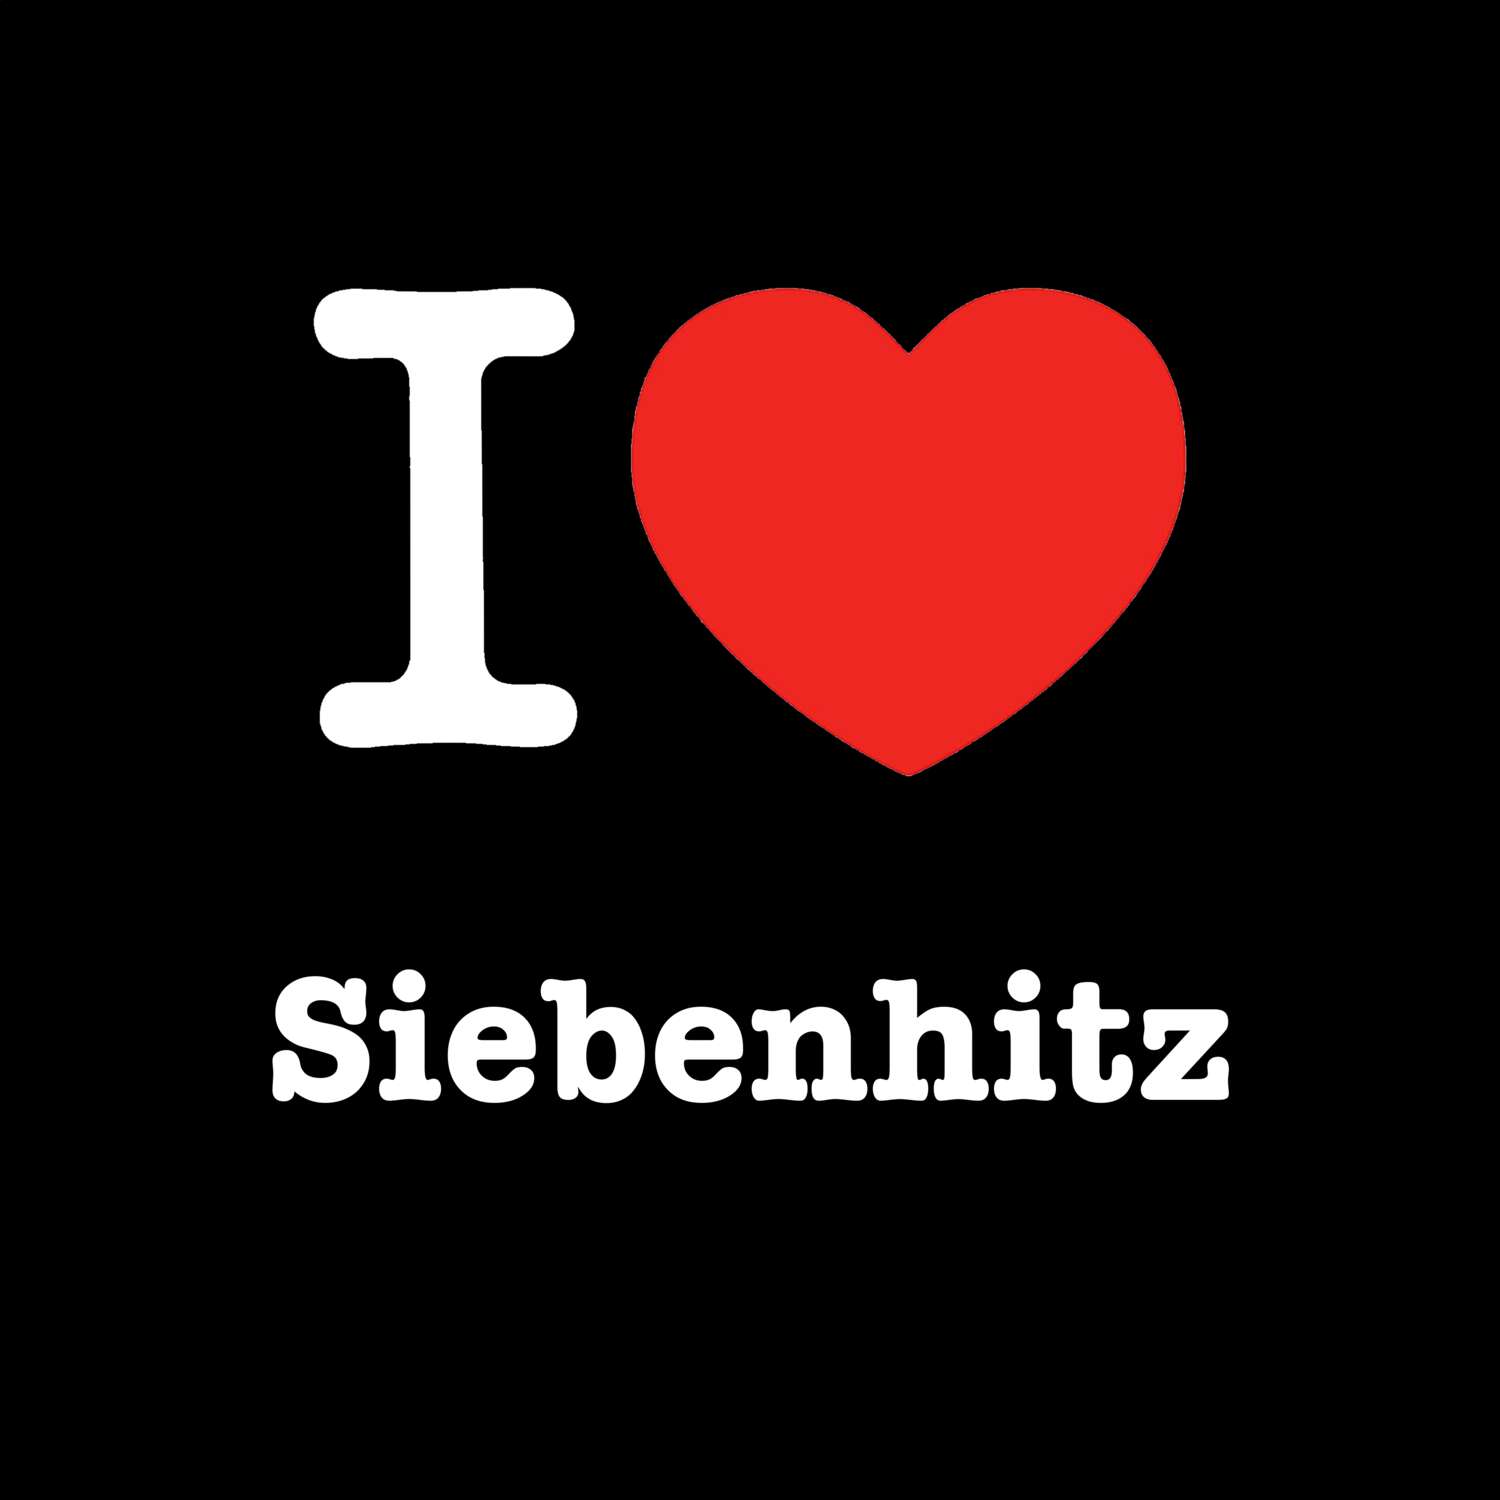 Siebenhitz T-Shirt »I love«